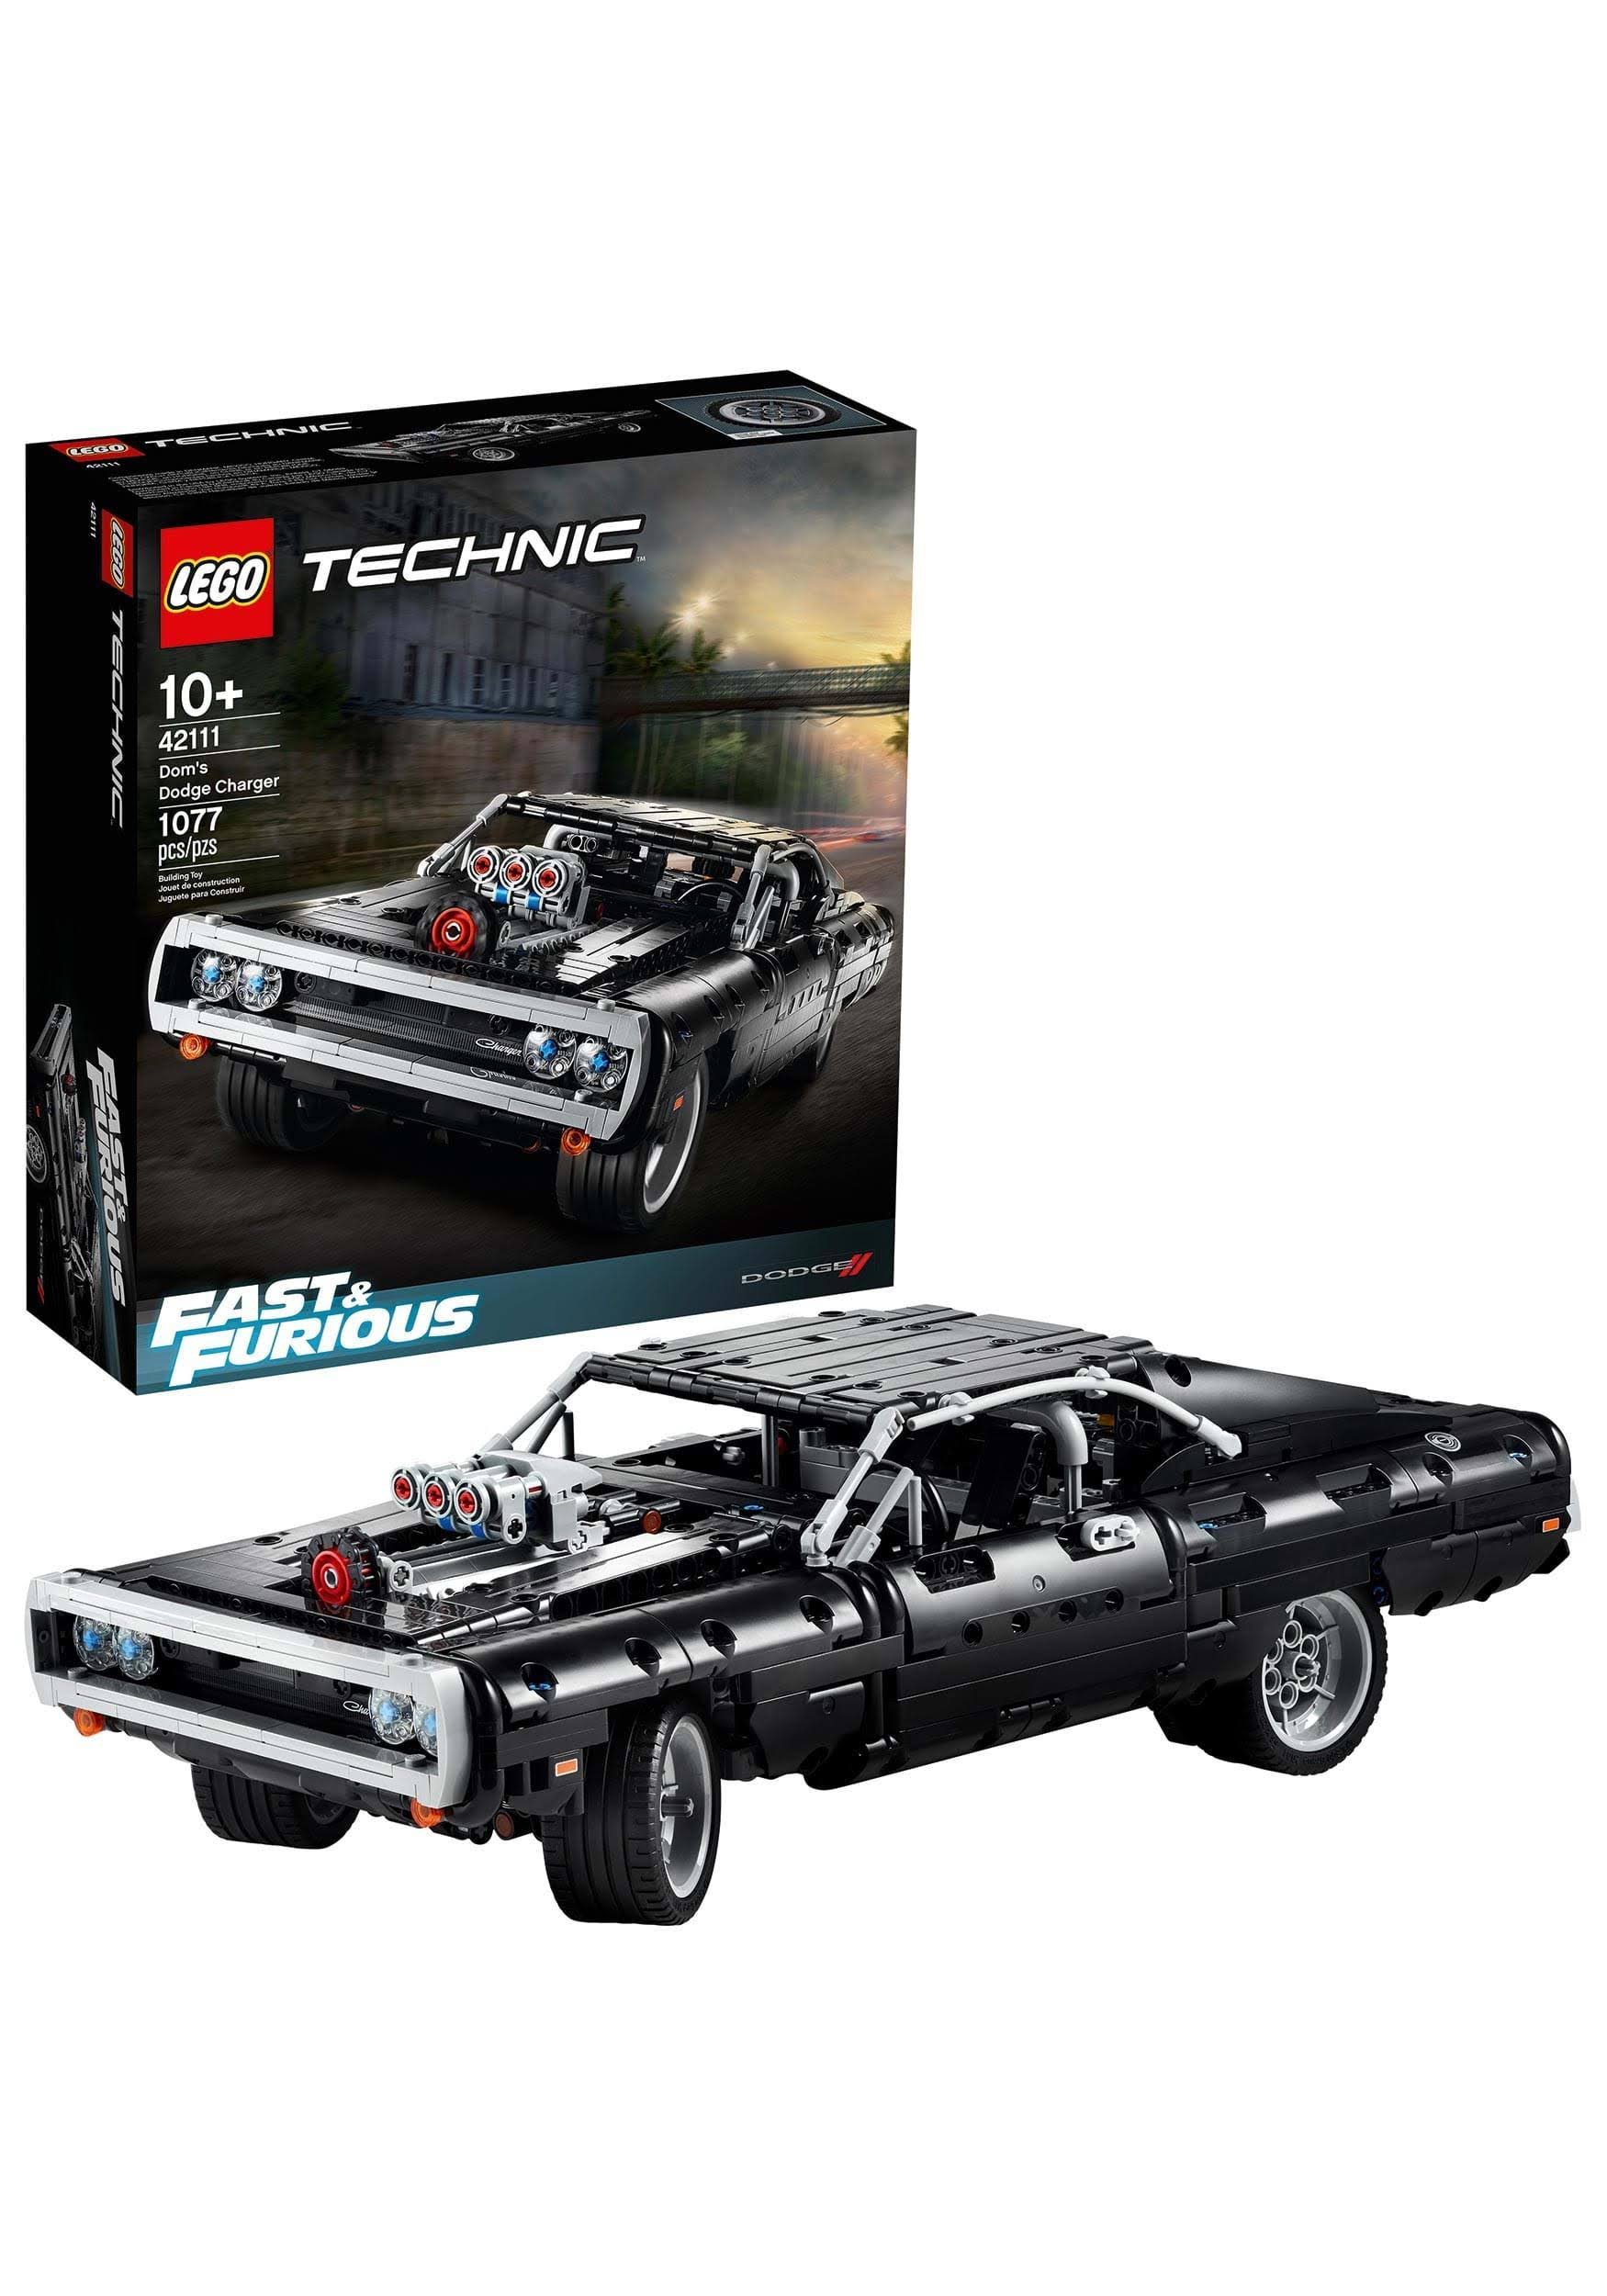 LEGO Technic Fast & Furious Doms Dodge Charger 42111 Race Car Building Set